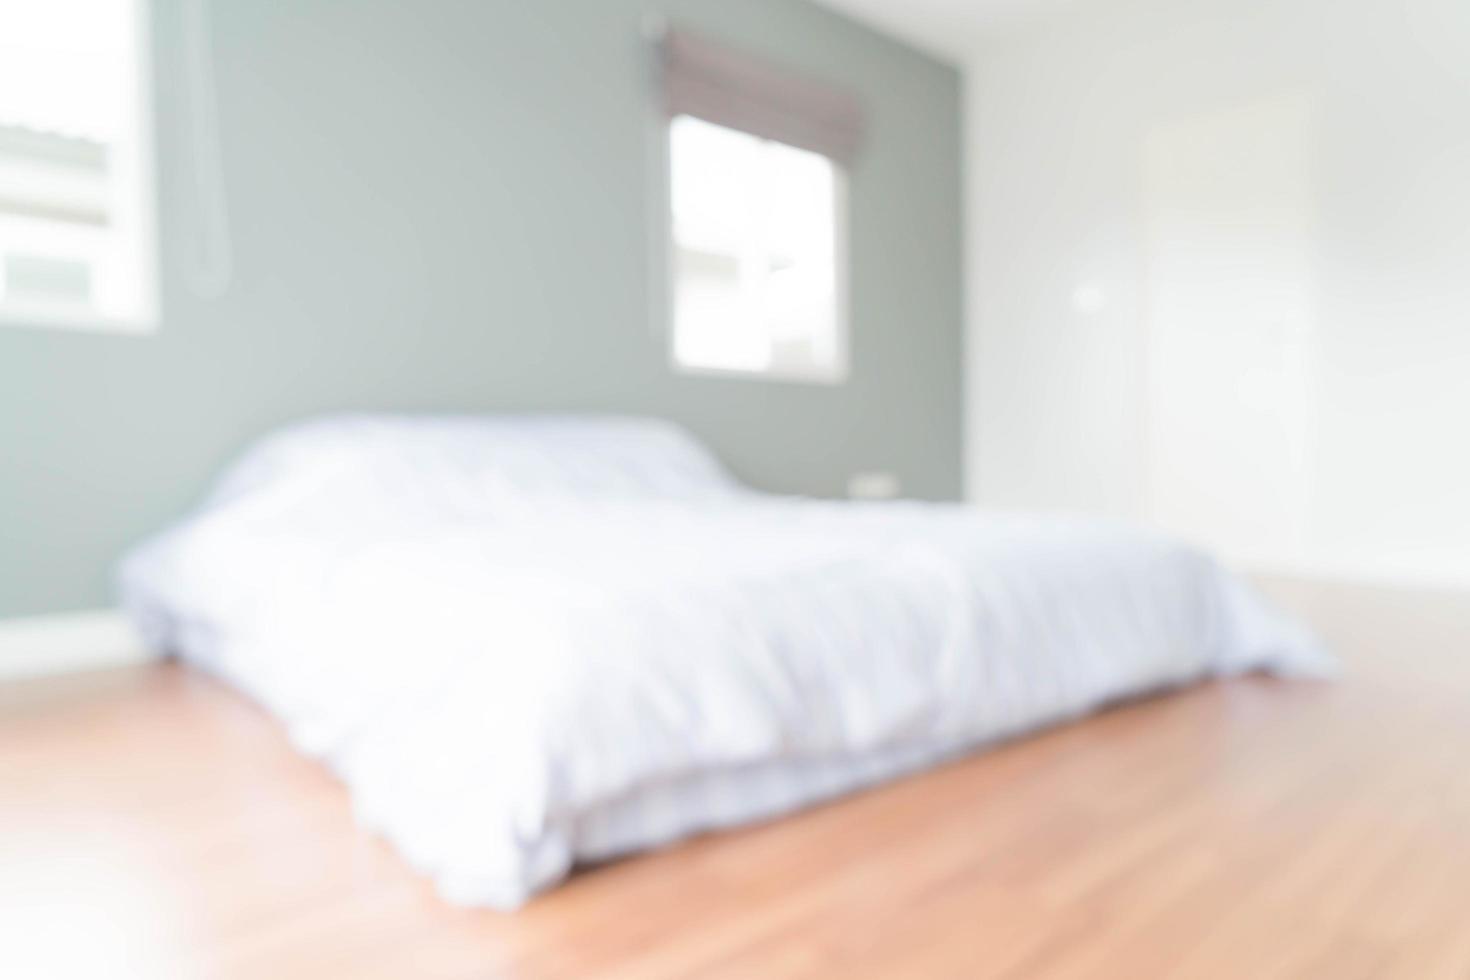 Abstract blur bedroom interior photo